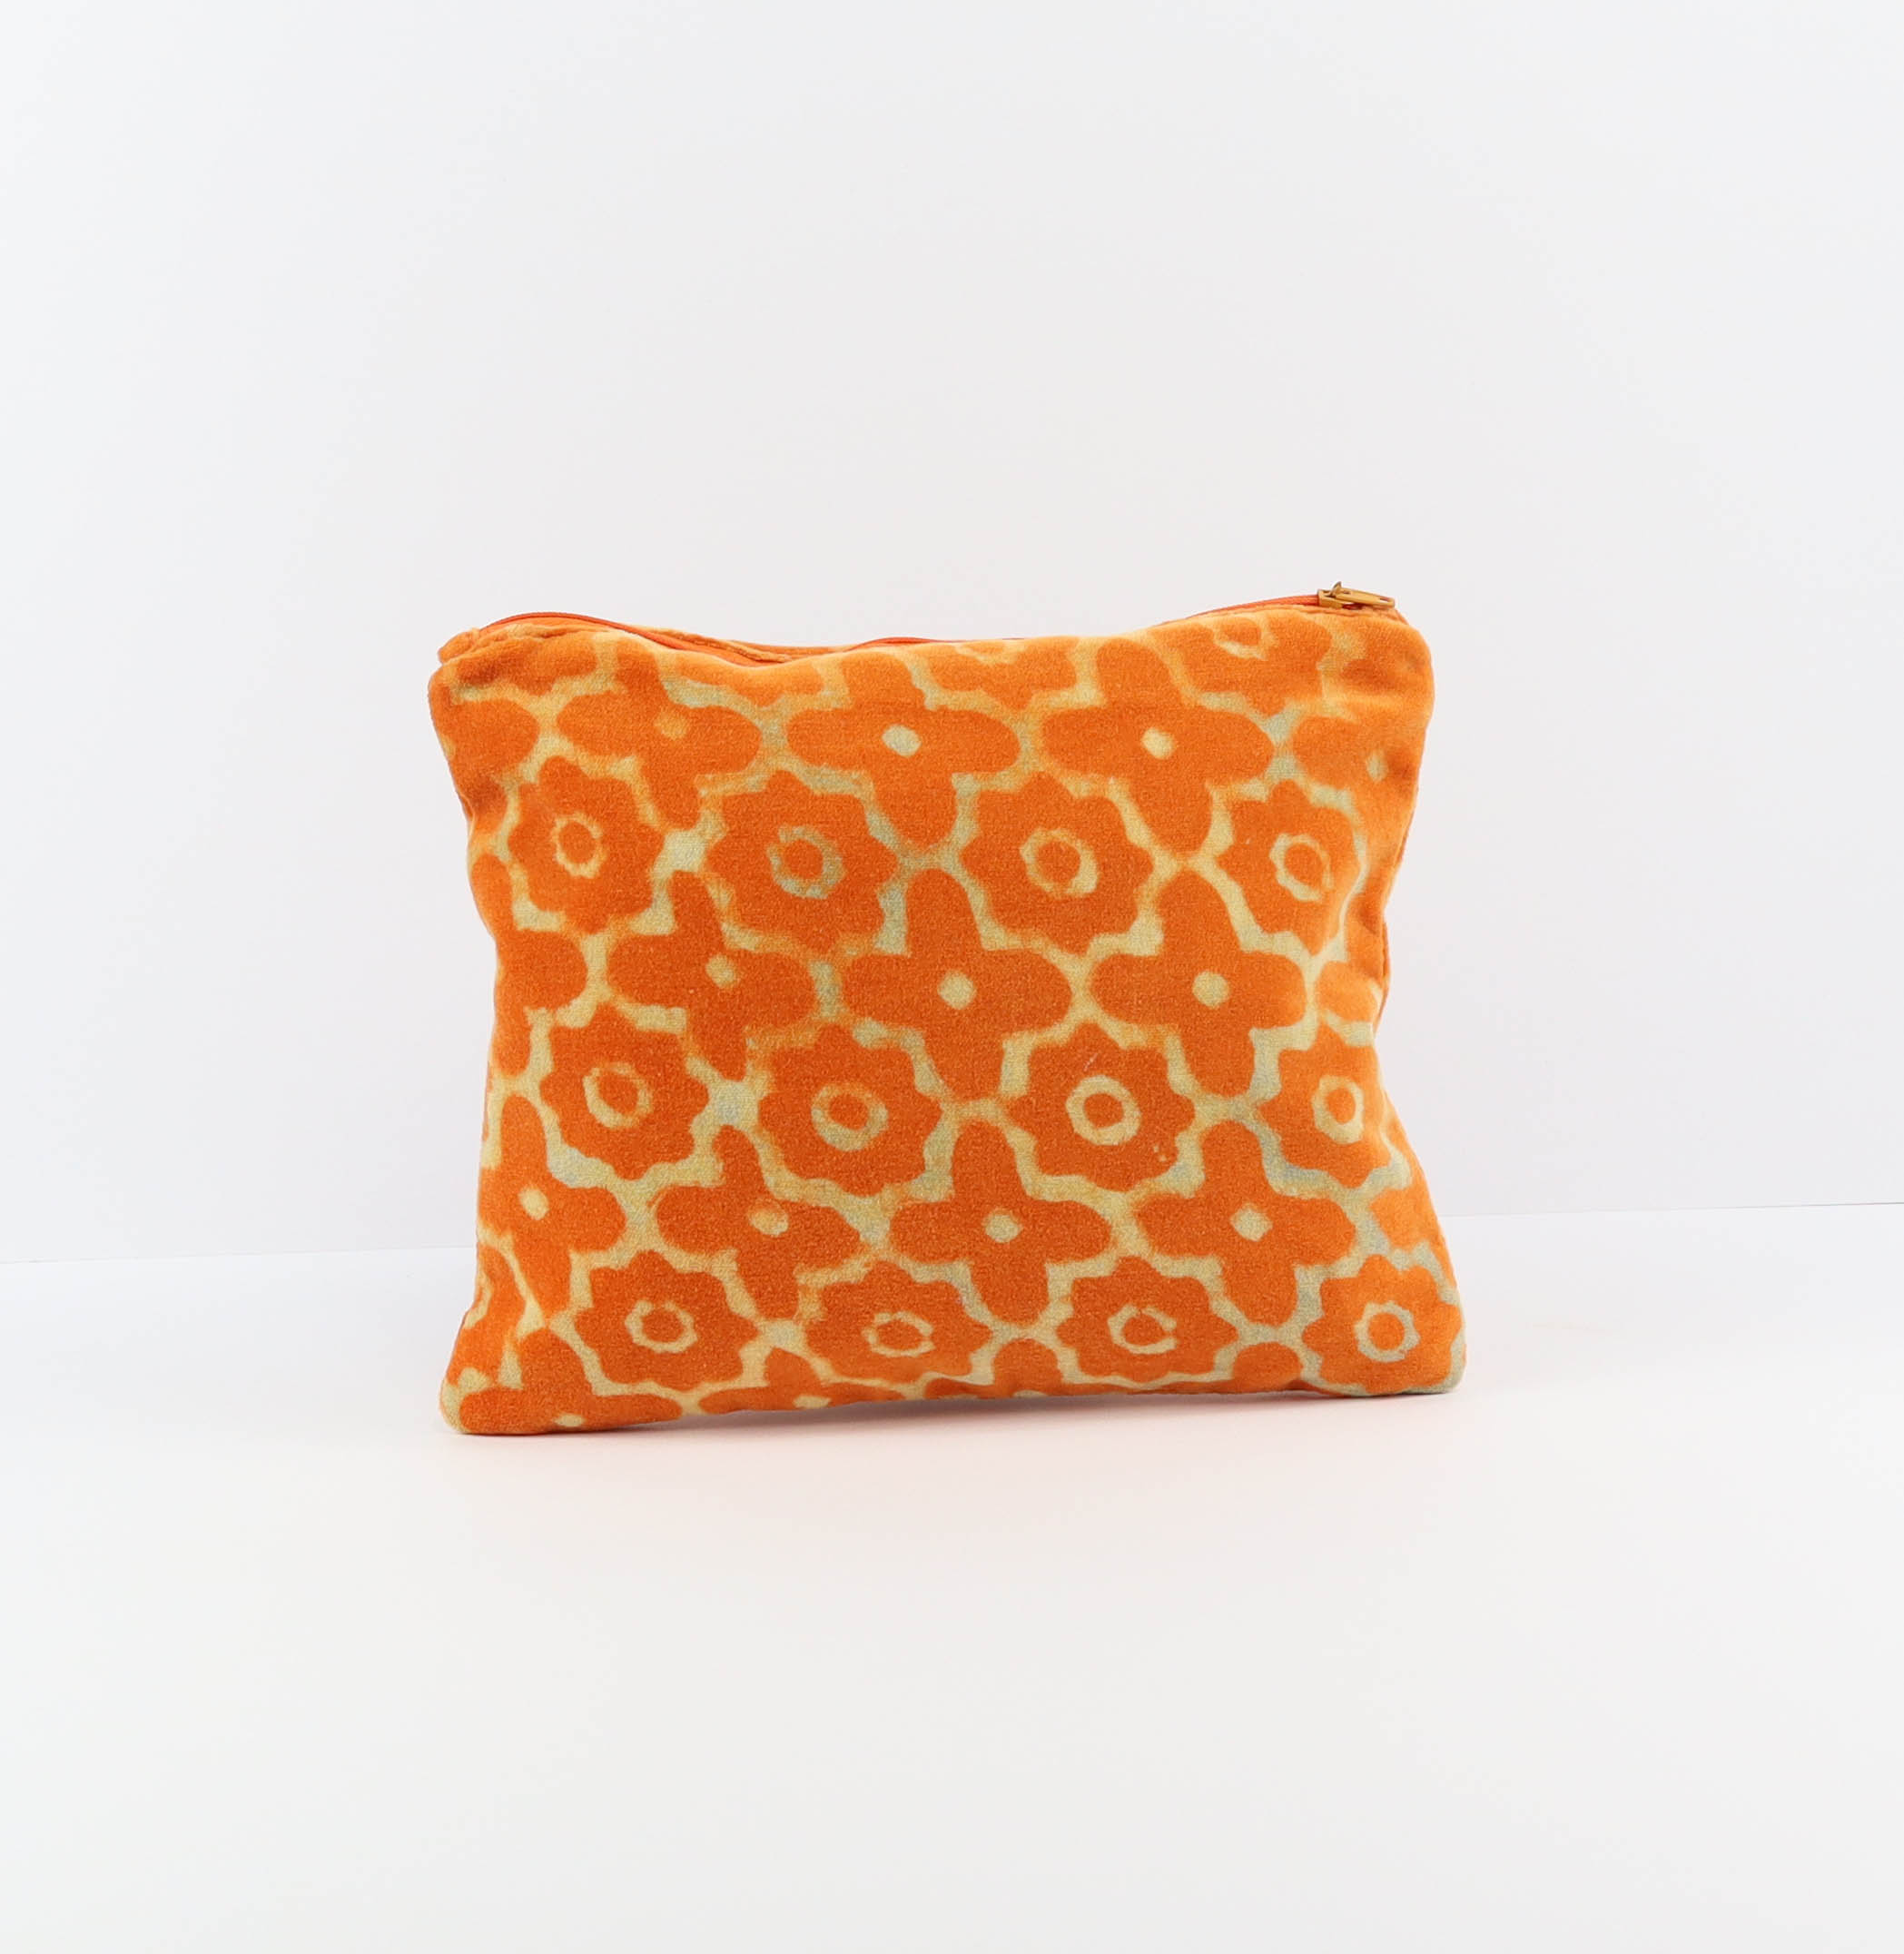 Indigo & Wills Morocco Design Orange velvet pouch